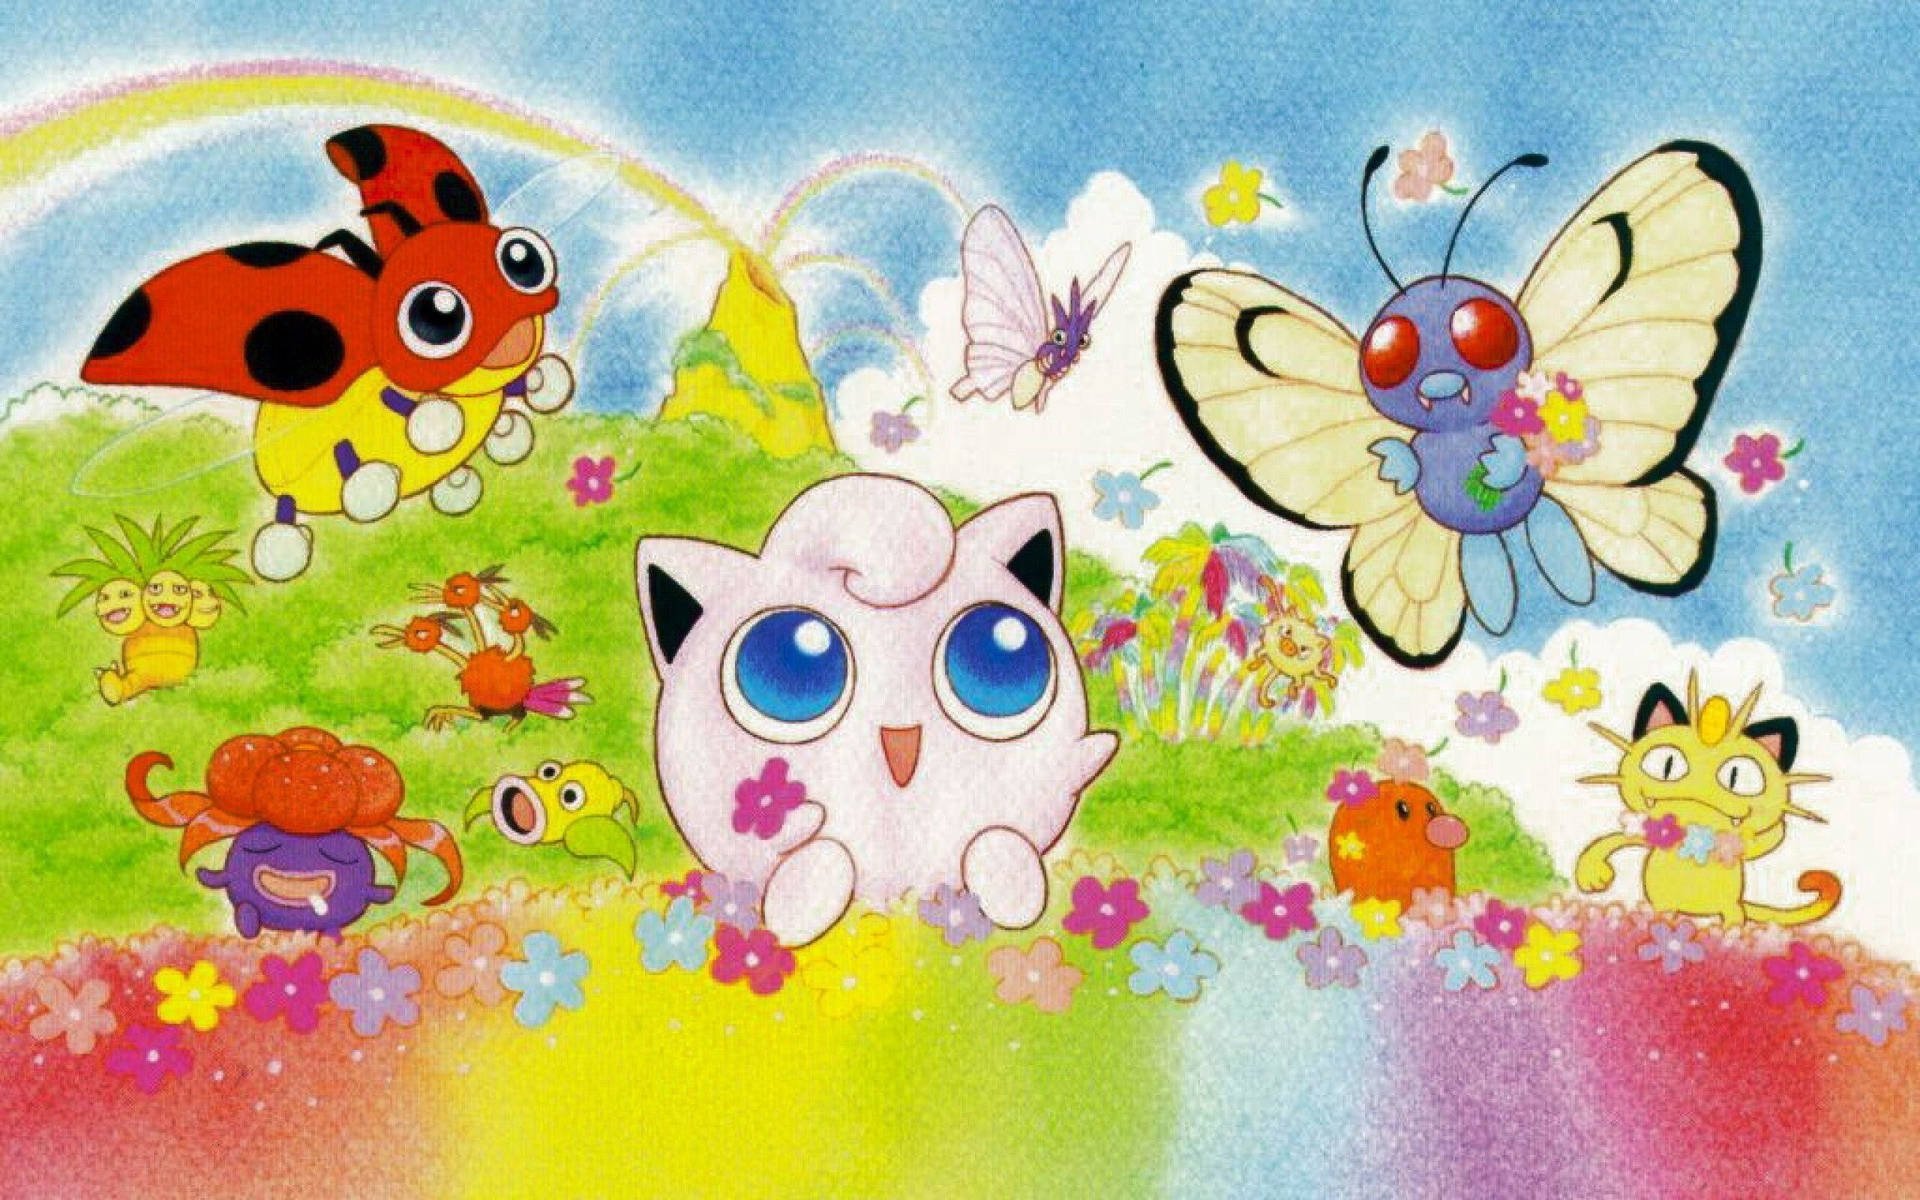 Free Cute Pokemon Wallpaper Downloads, Cute Pokemon Wallpaper for FREE